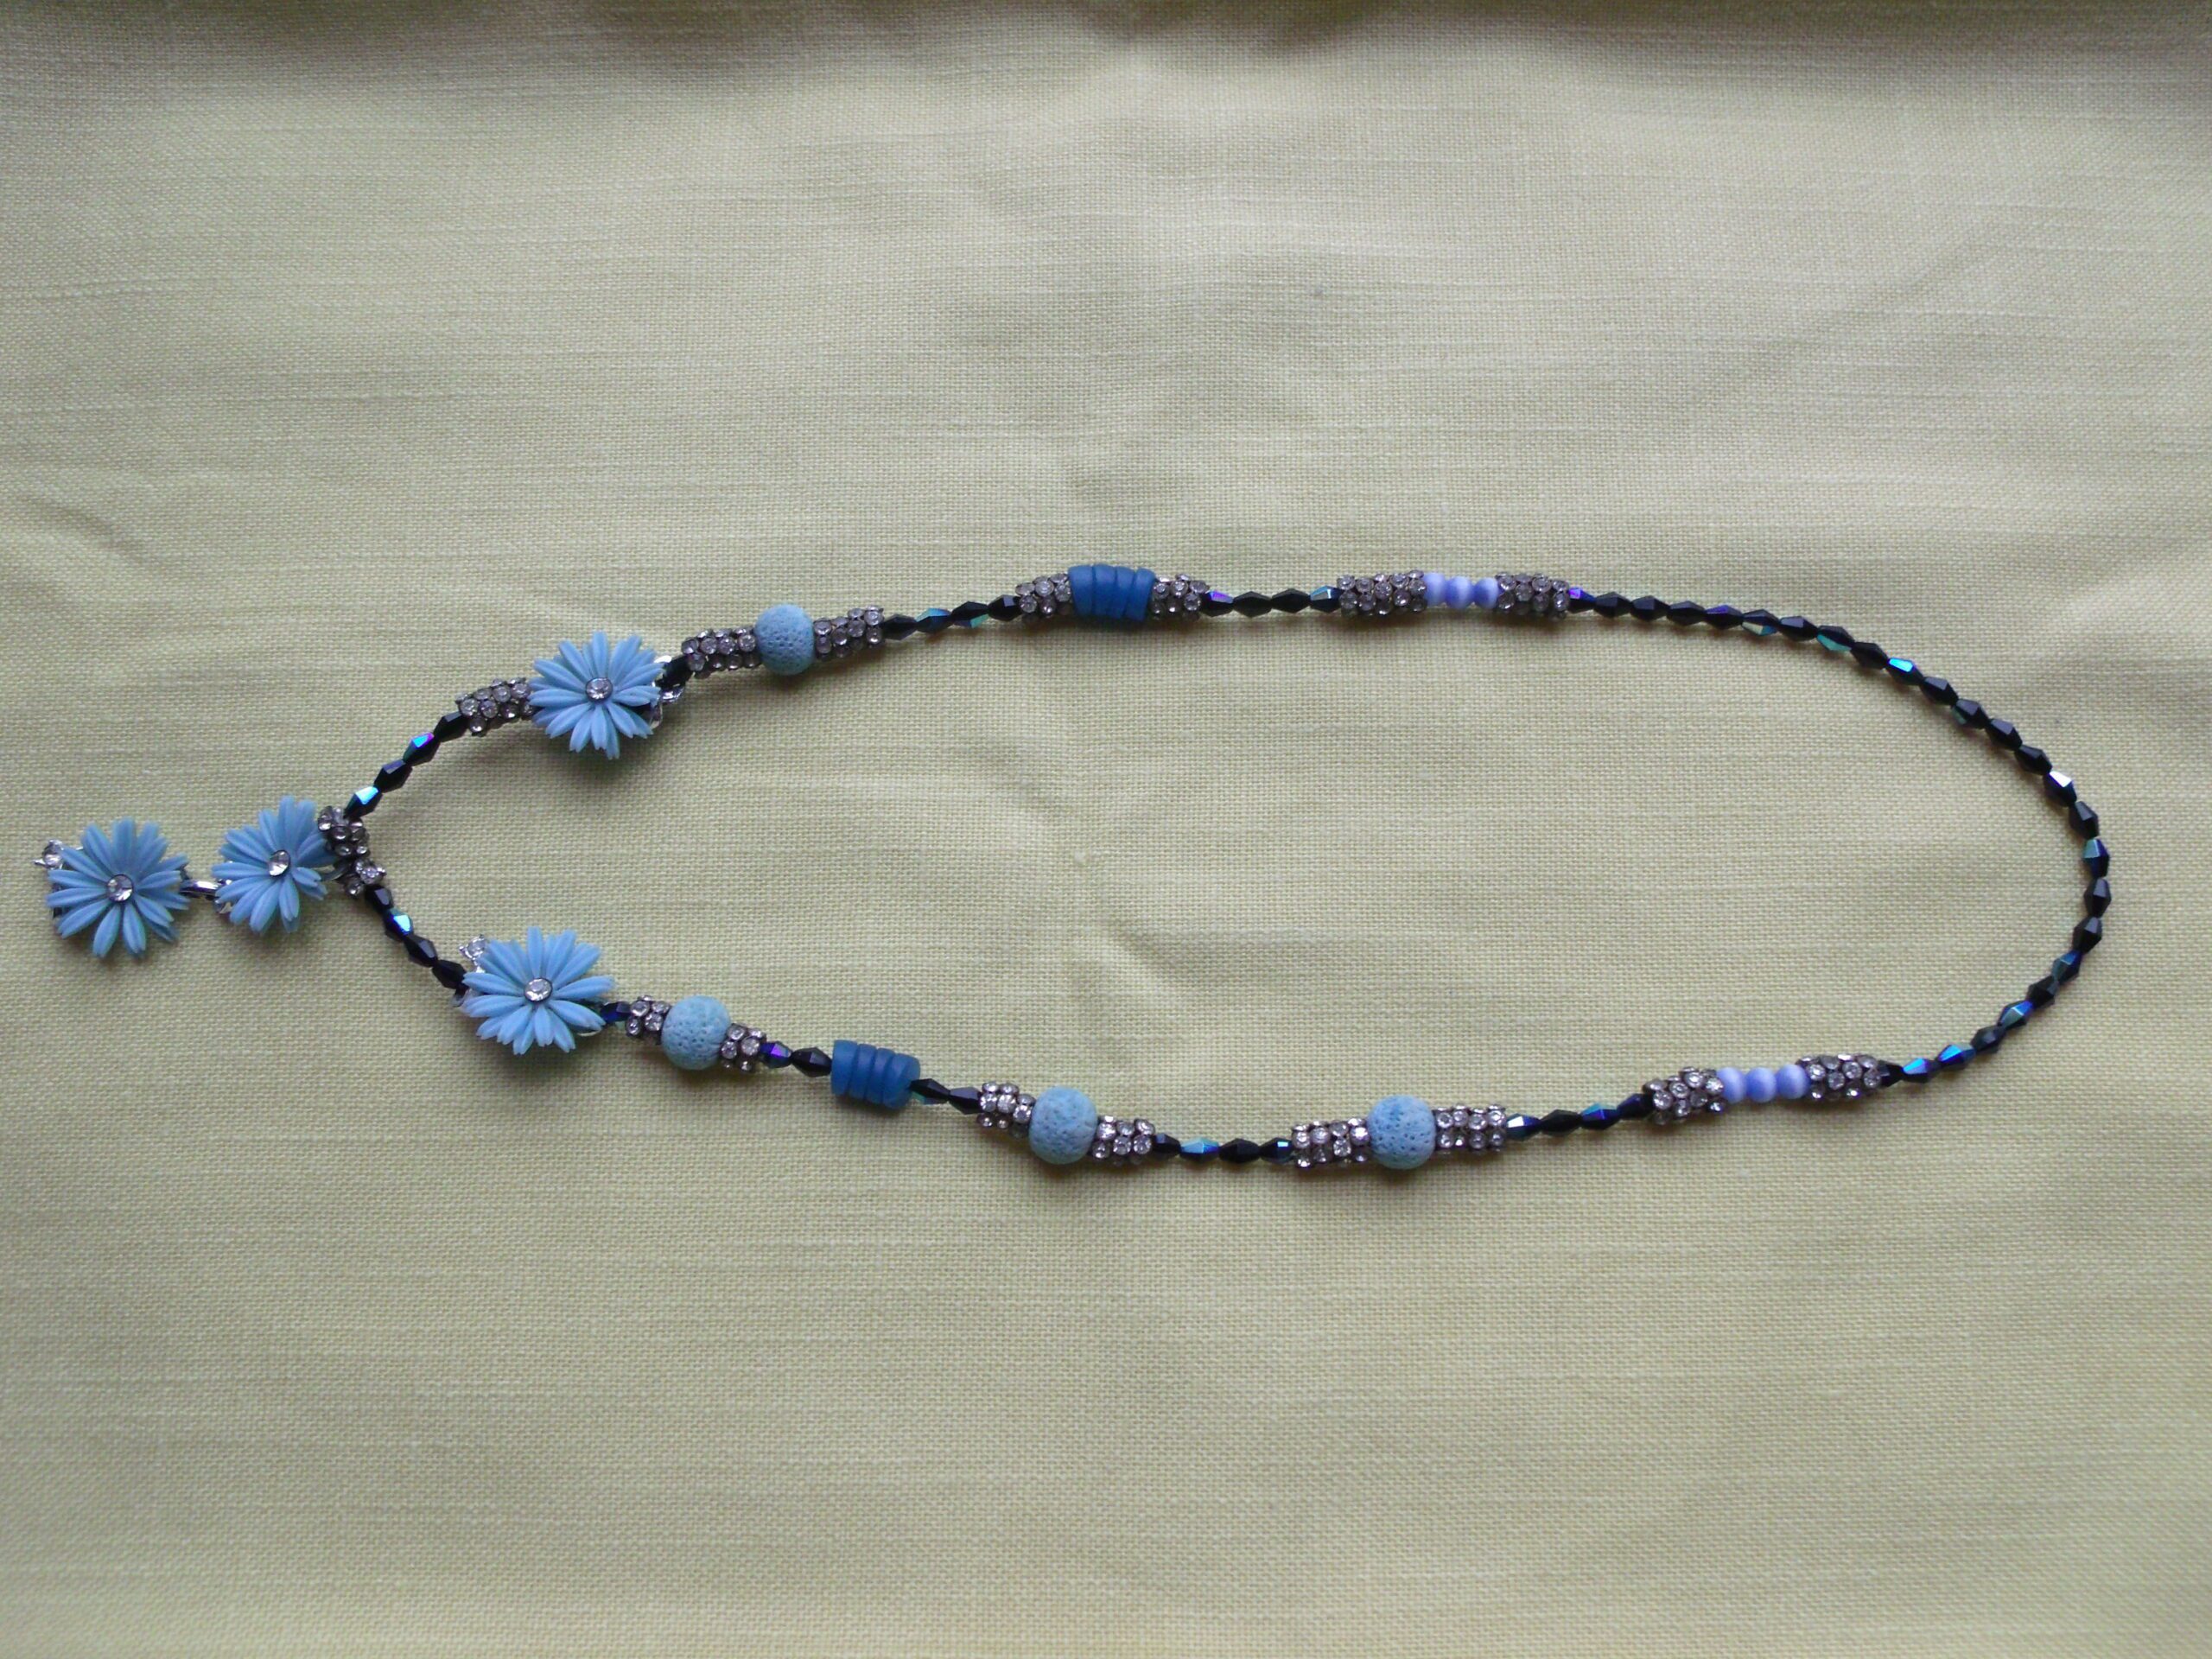 A 13" elegant necklace